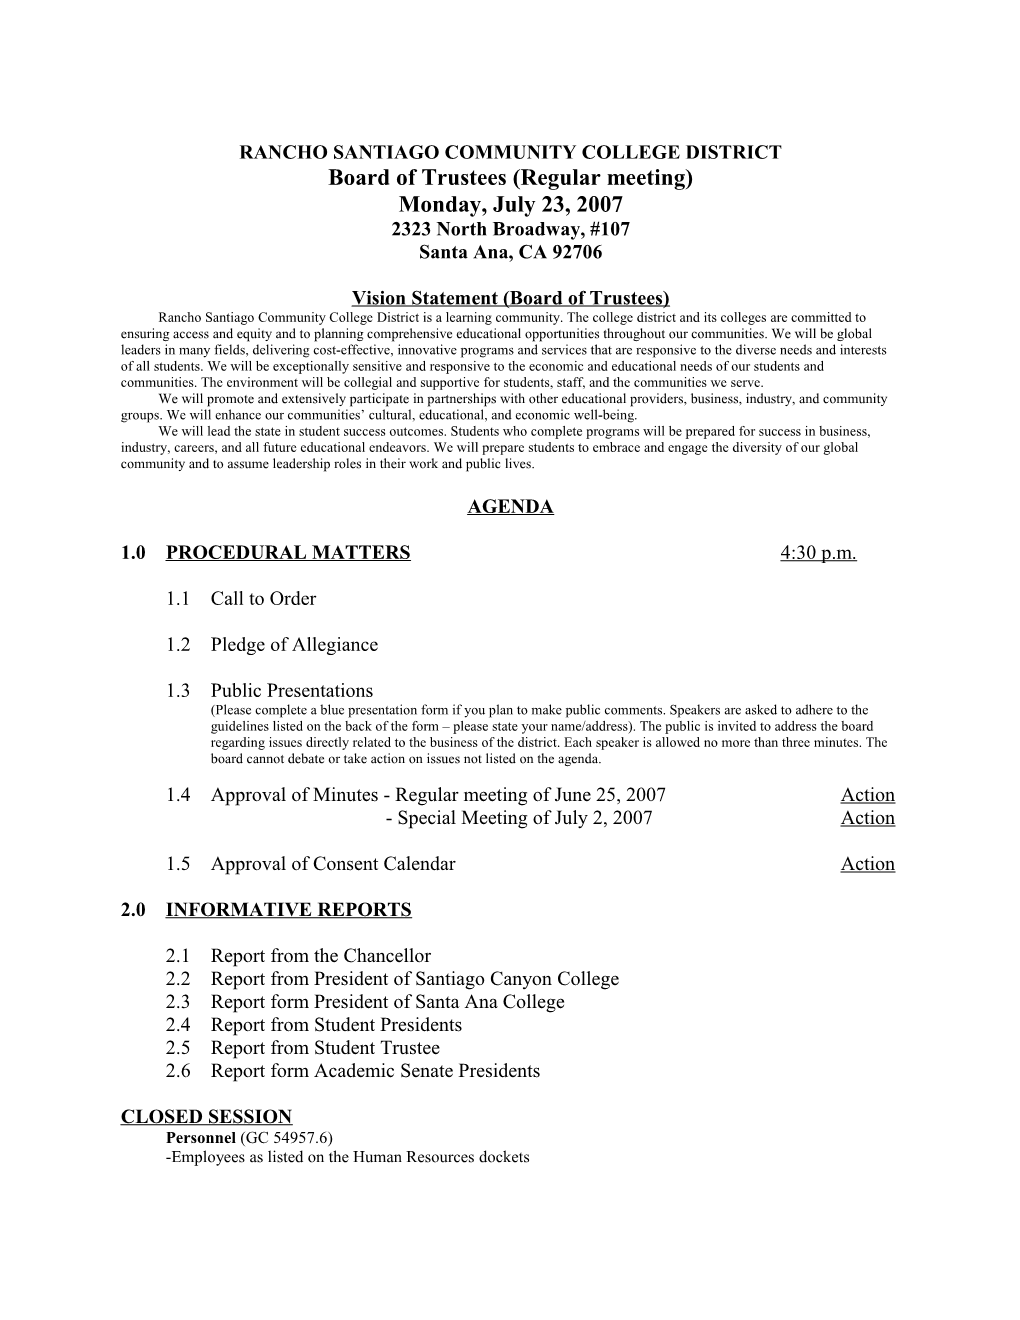 Agenda for July 23, 2007 Regular Meeting